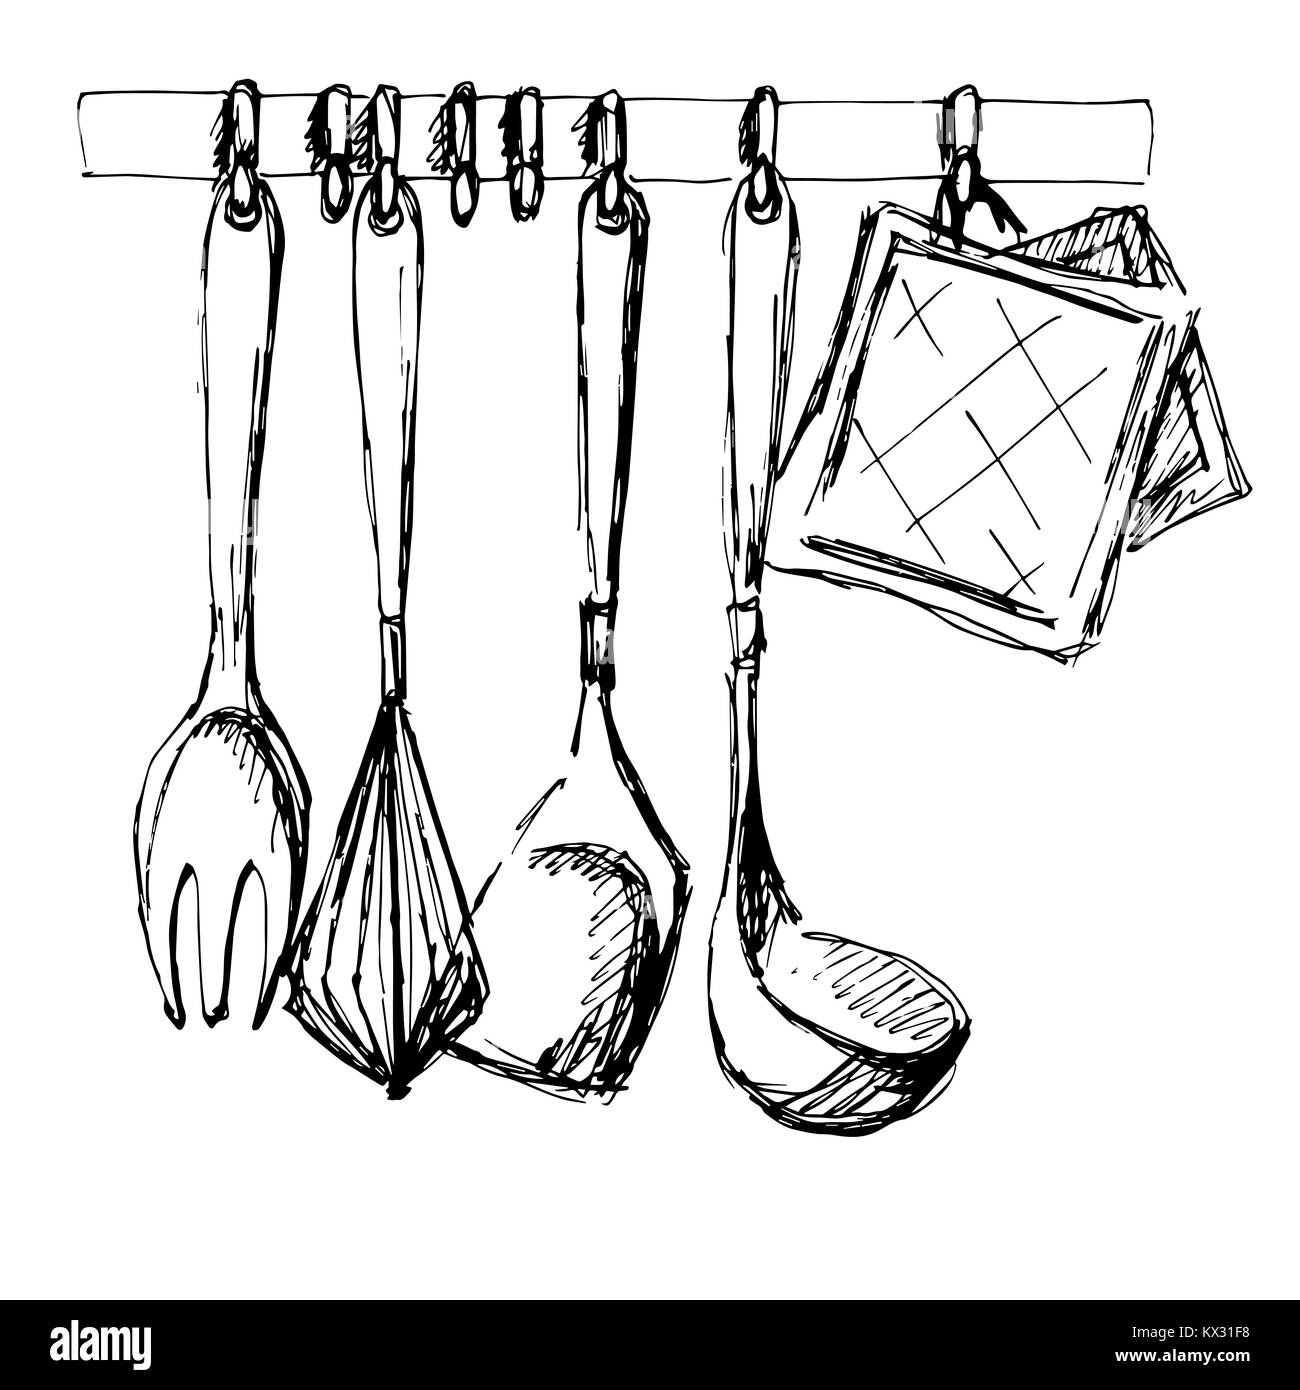 objetos de cocina Imagen Vector de stock - Alamy